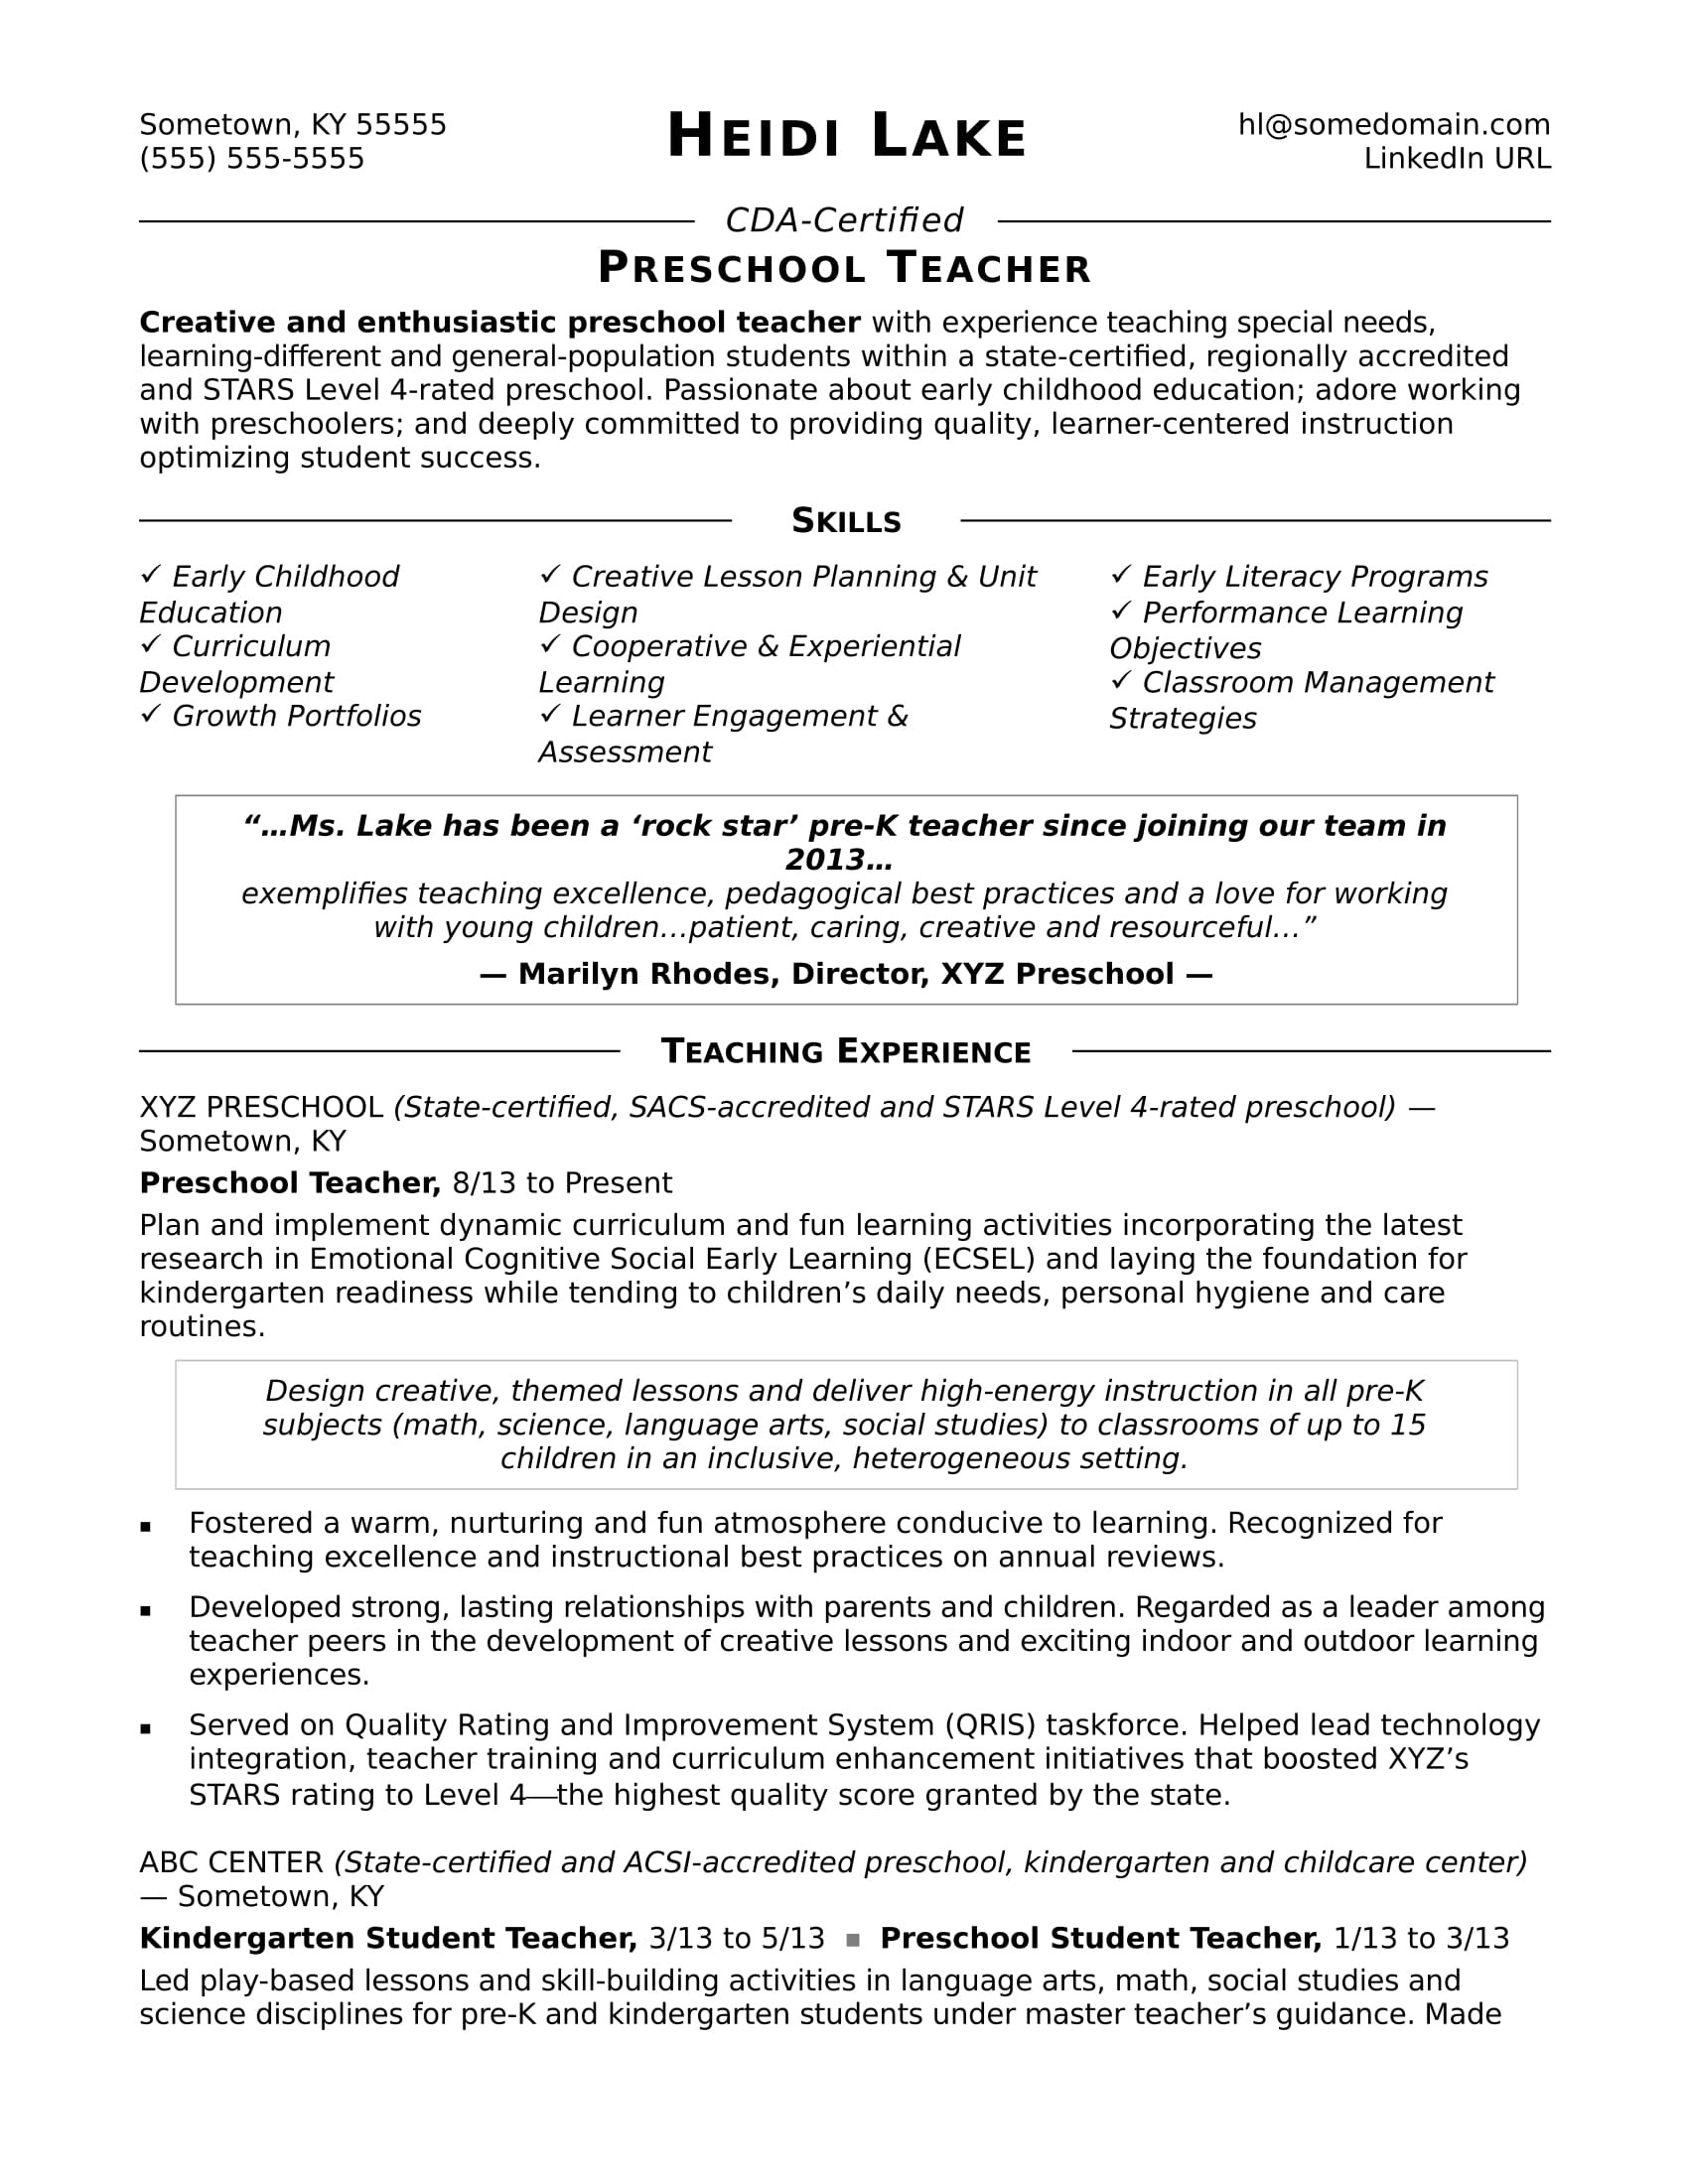 Sample Resume for Pre Primary School Teacher Preschool Teacher Resume Sample Monster.com